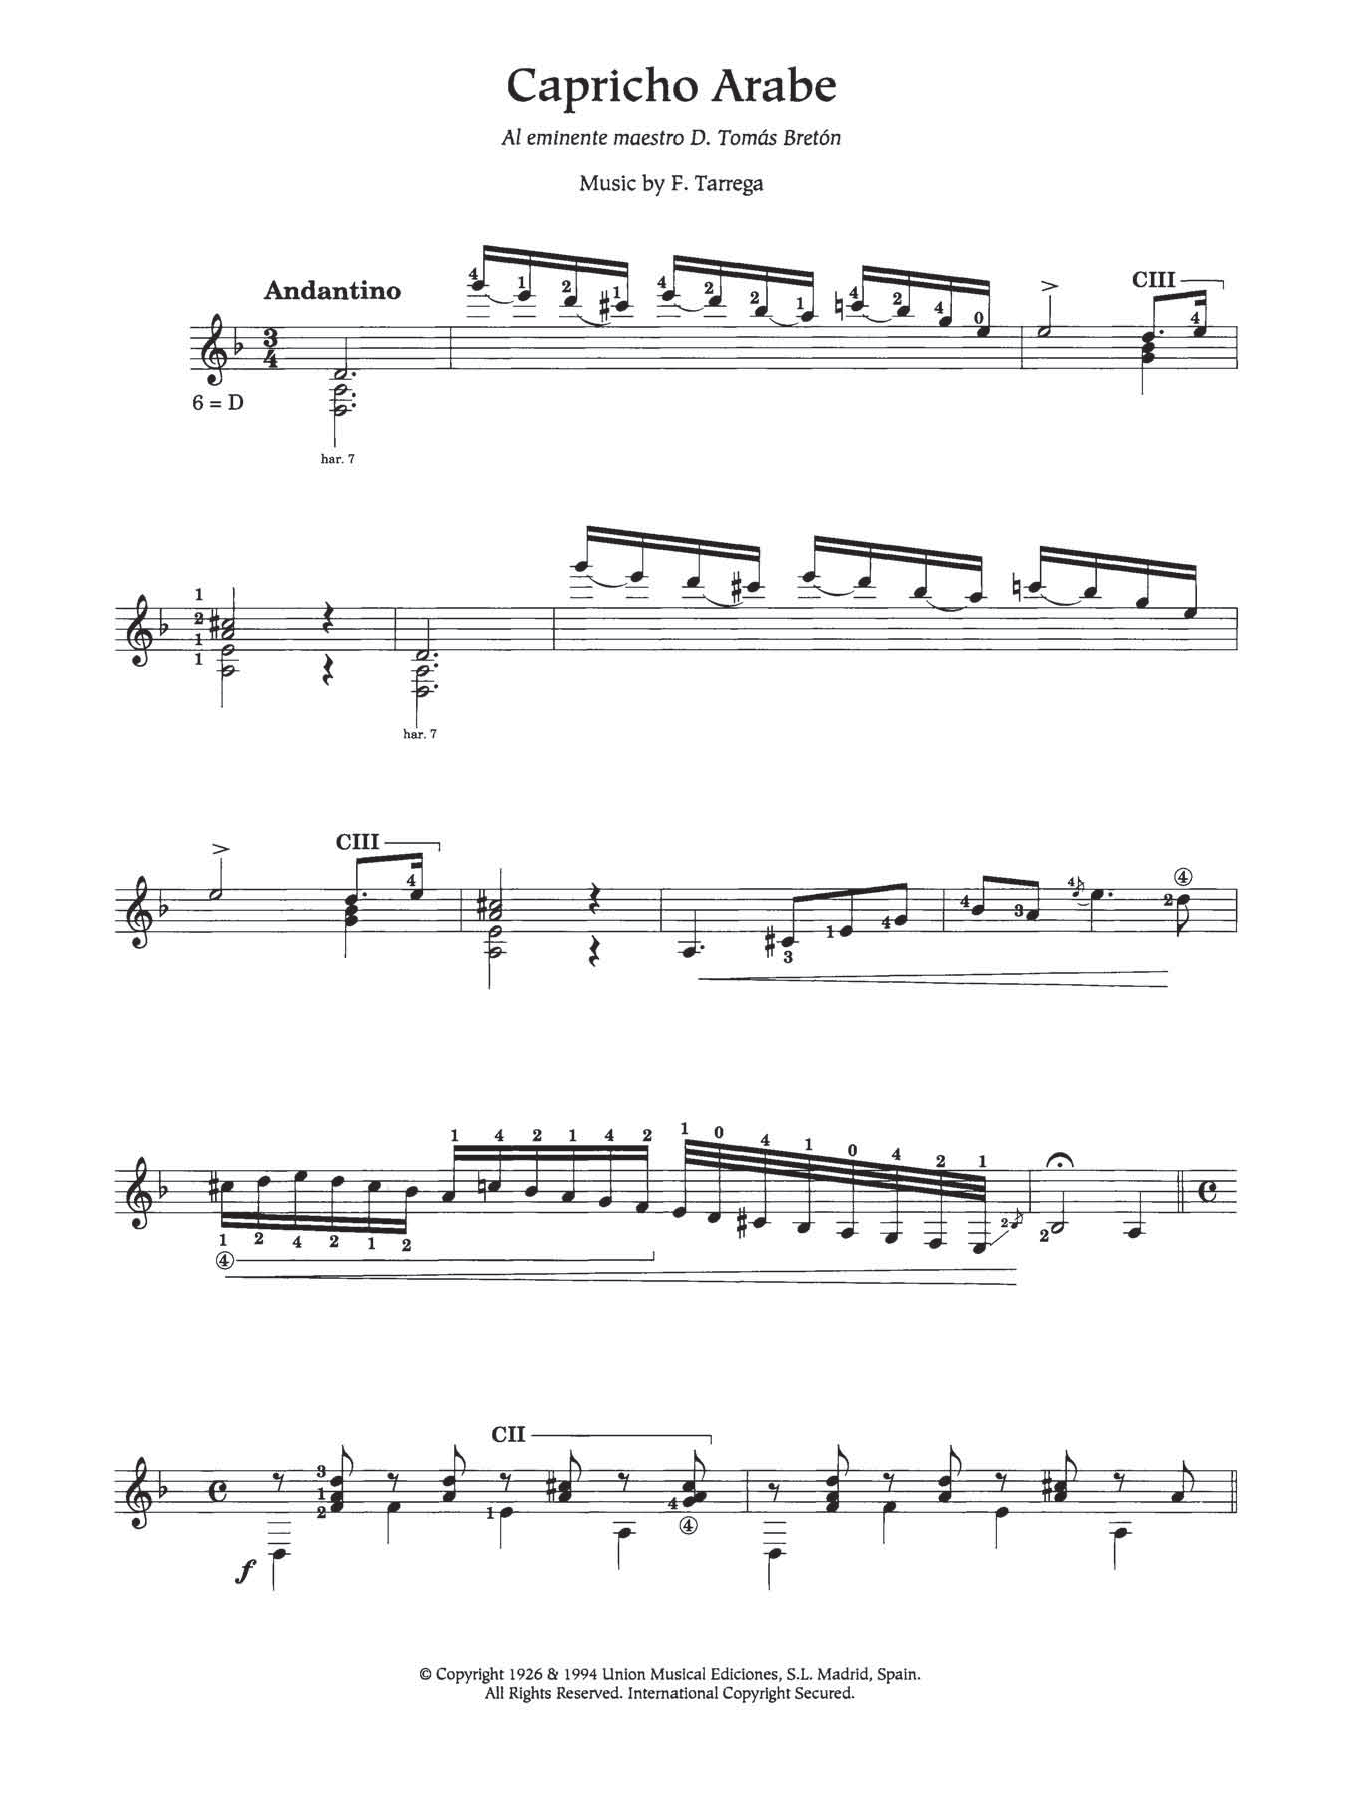 Francisco Tárrega Capricho Árabe Sheet Music Notes & Chords for Guitar - Download or Print PDF